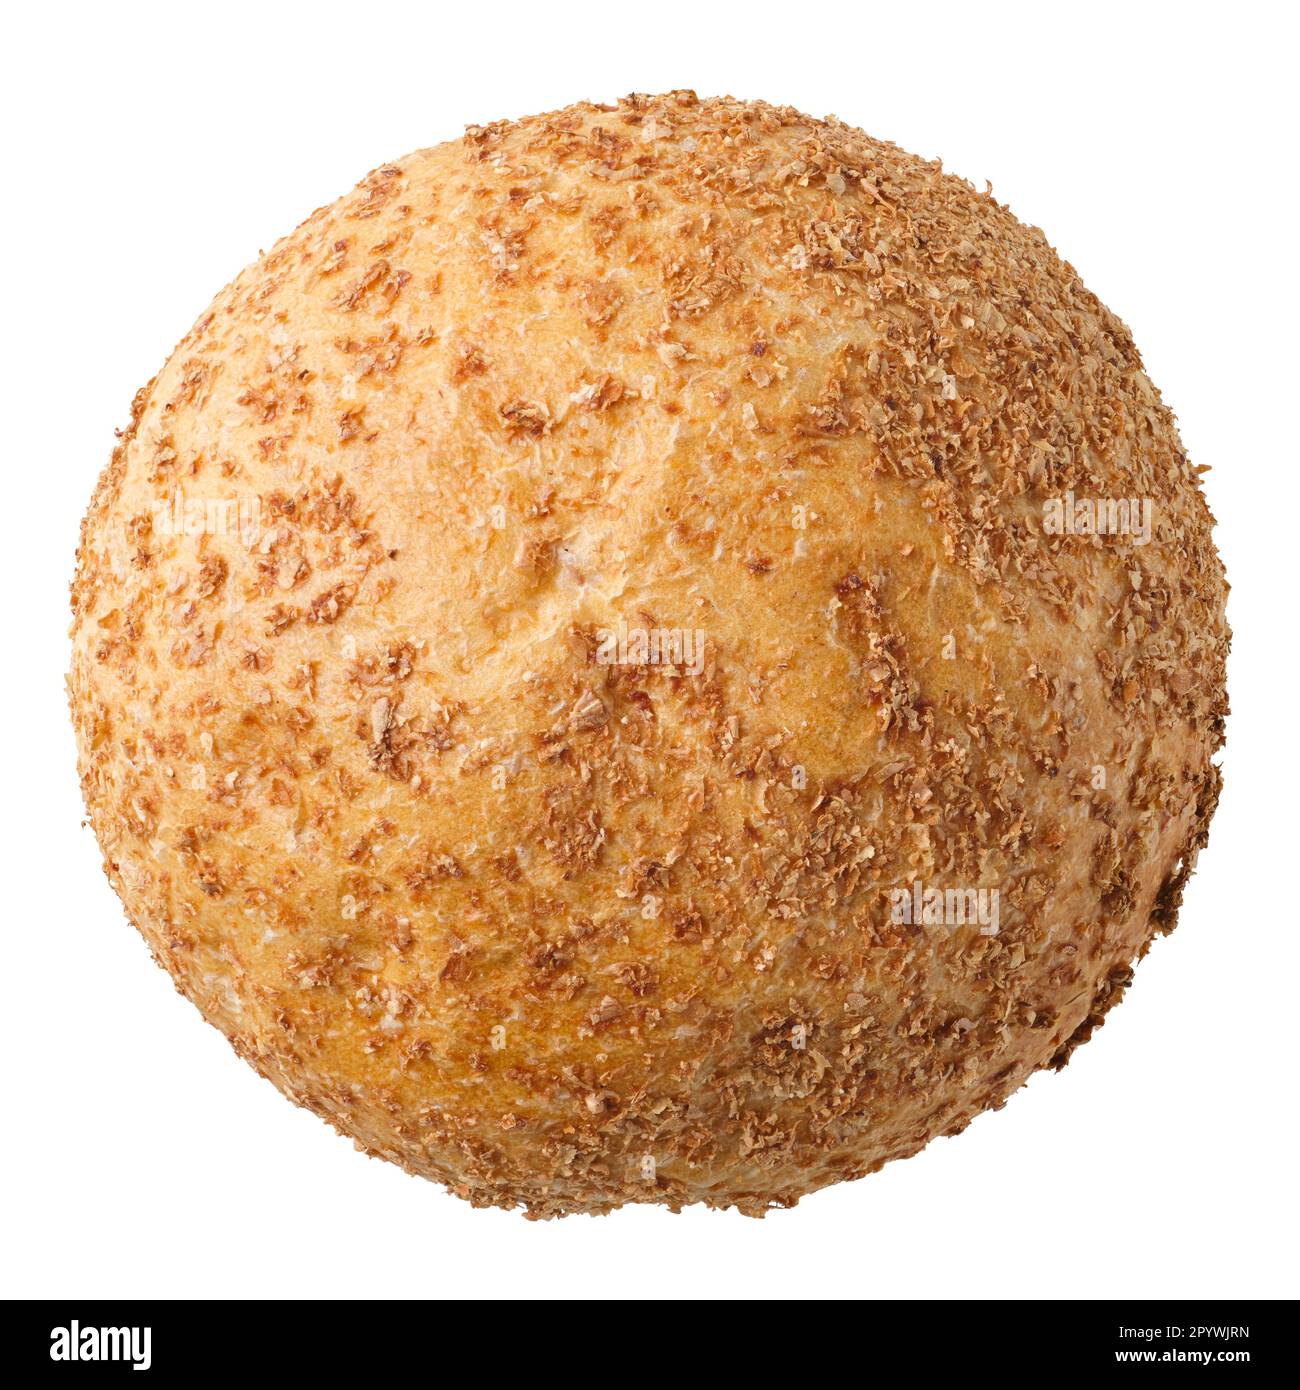 Pan de trigo de salvado redondo casero tradicional, aislado sobre fondo blanco Foto de stock